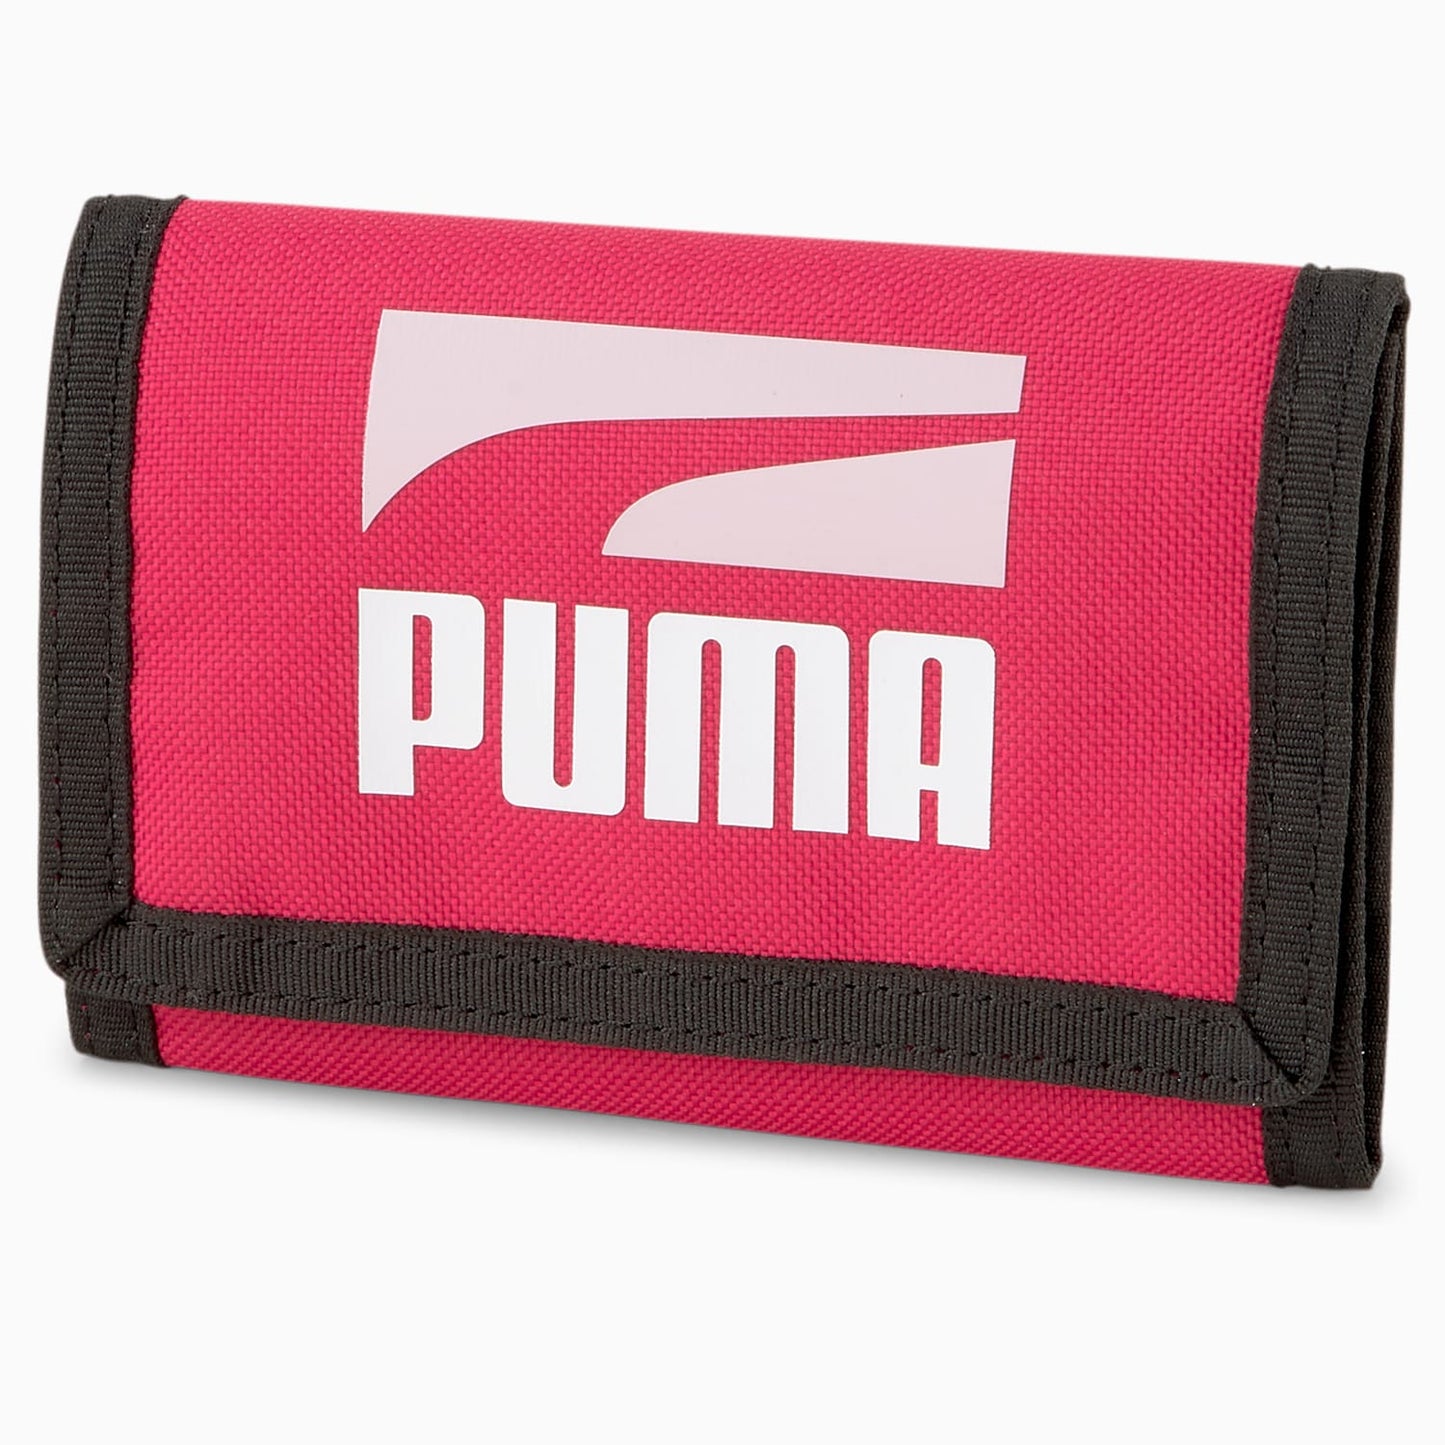 puma wallet-05405905